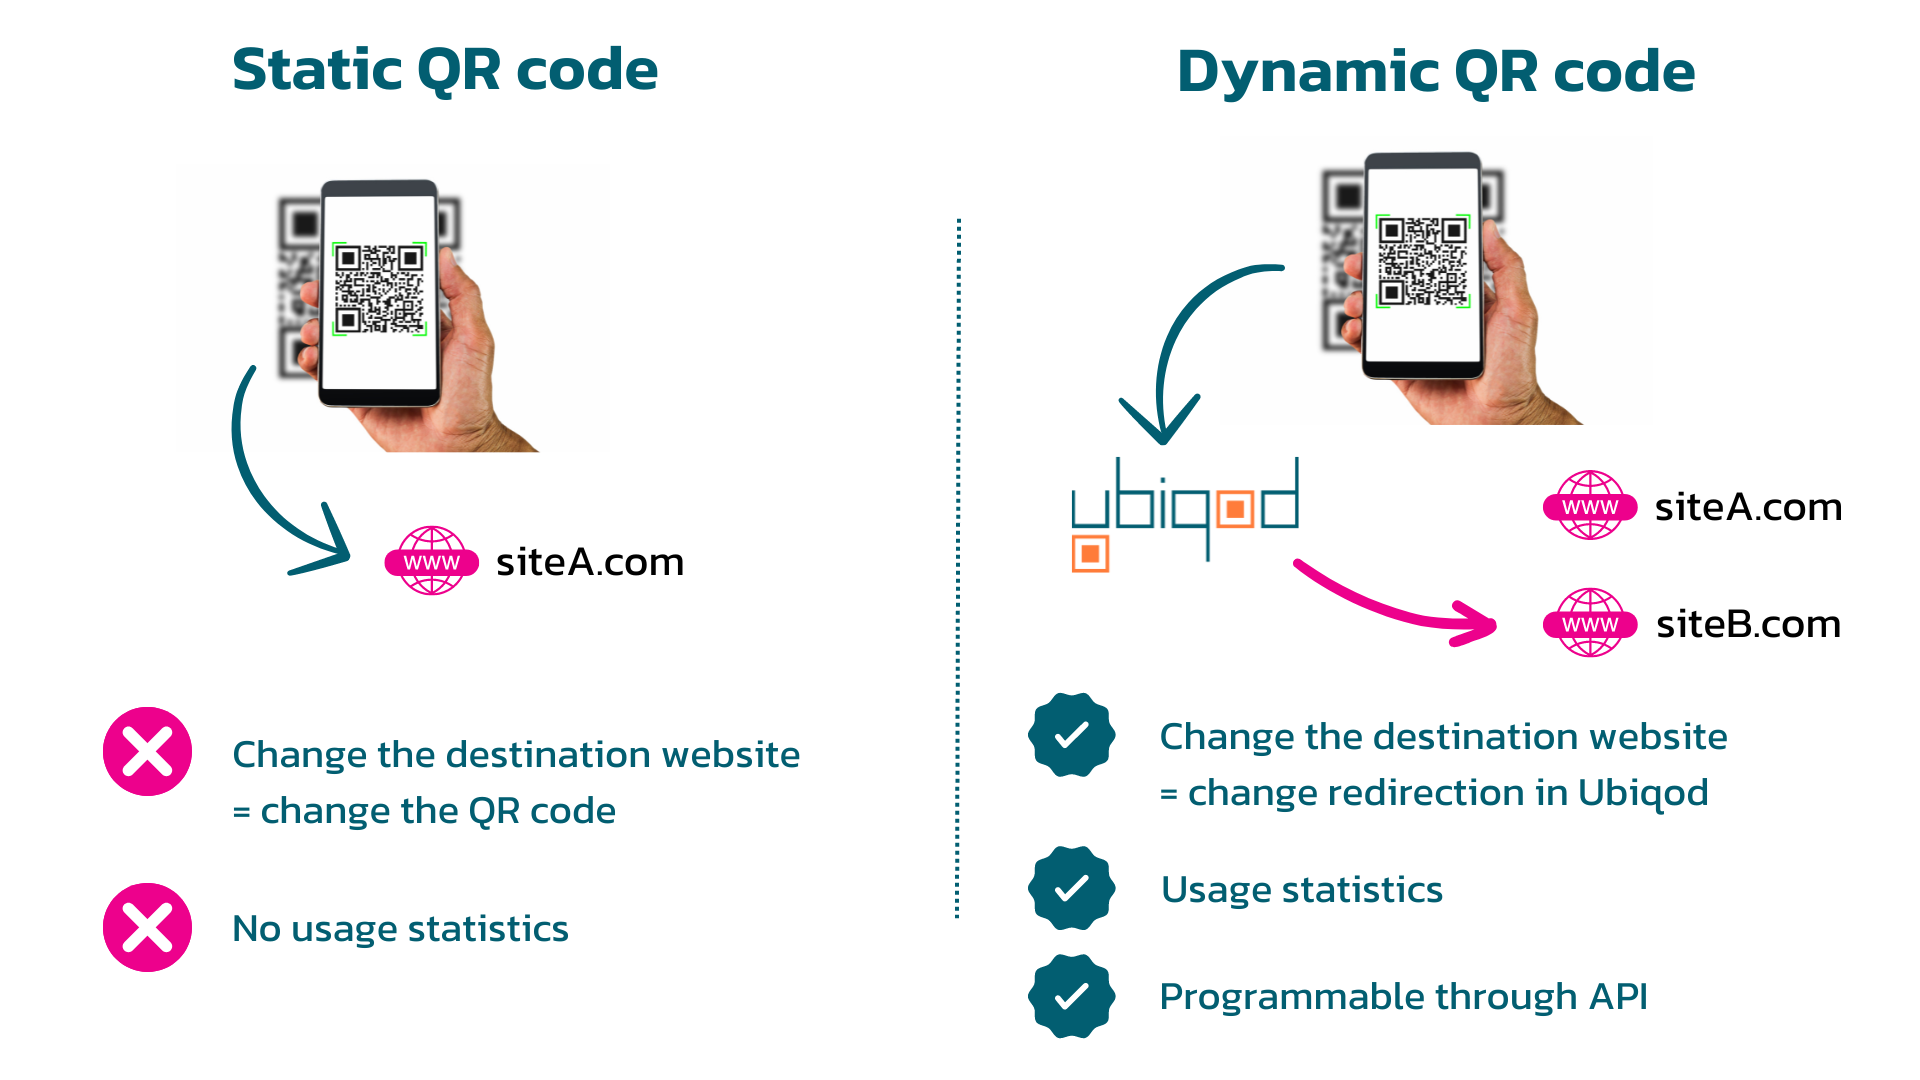 Static vs dynamic QR codes